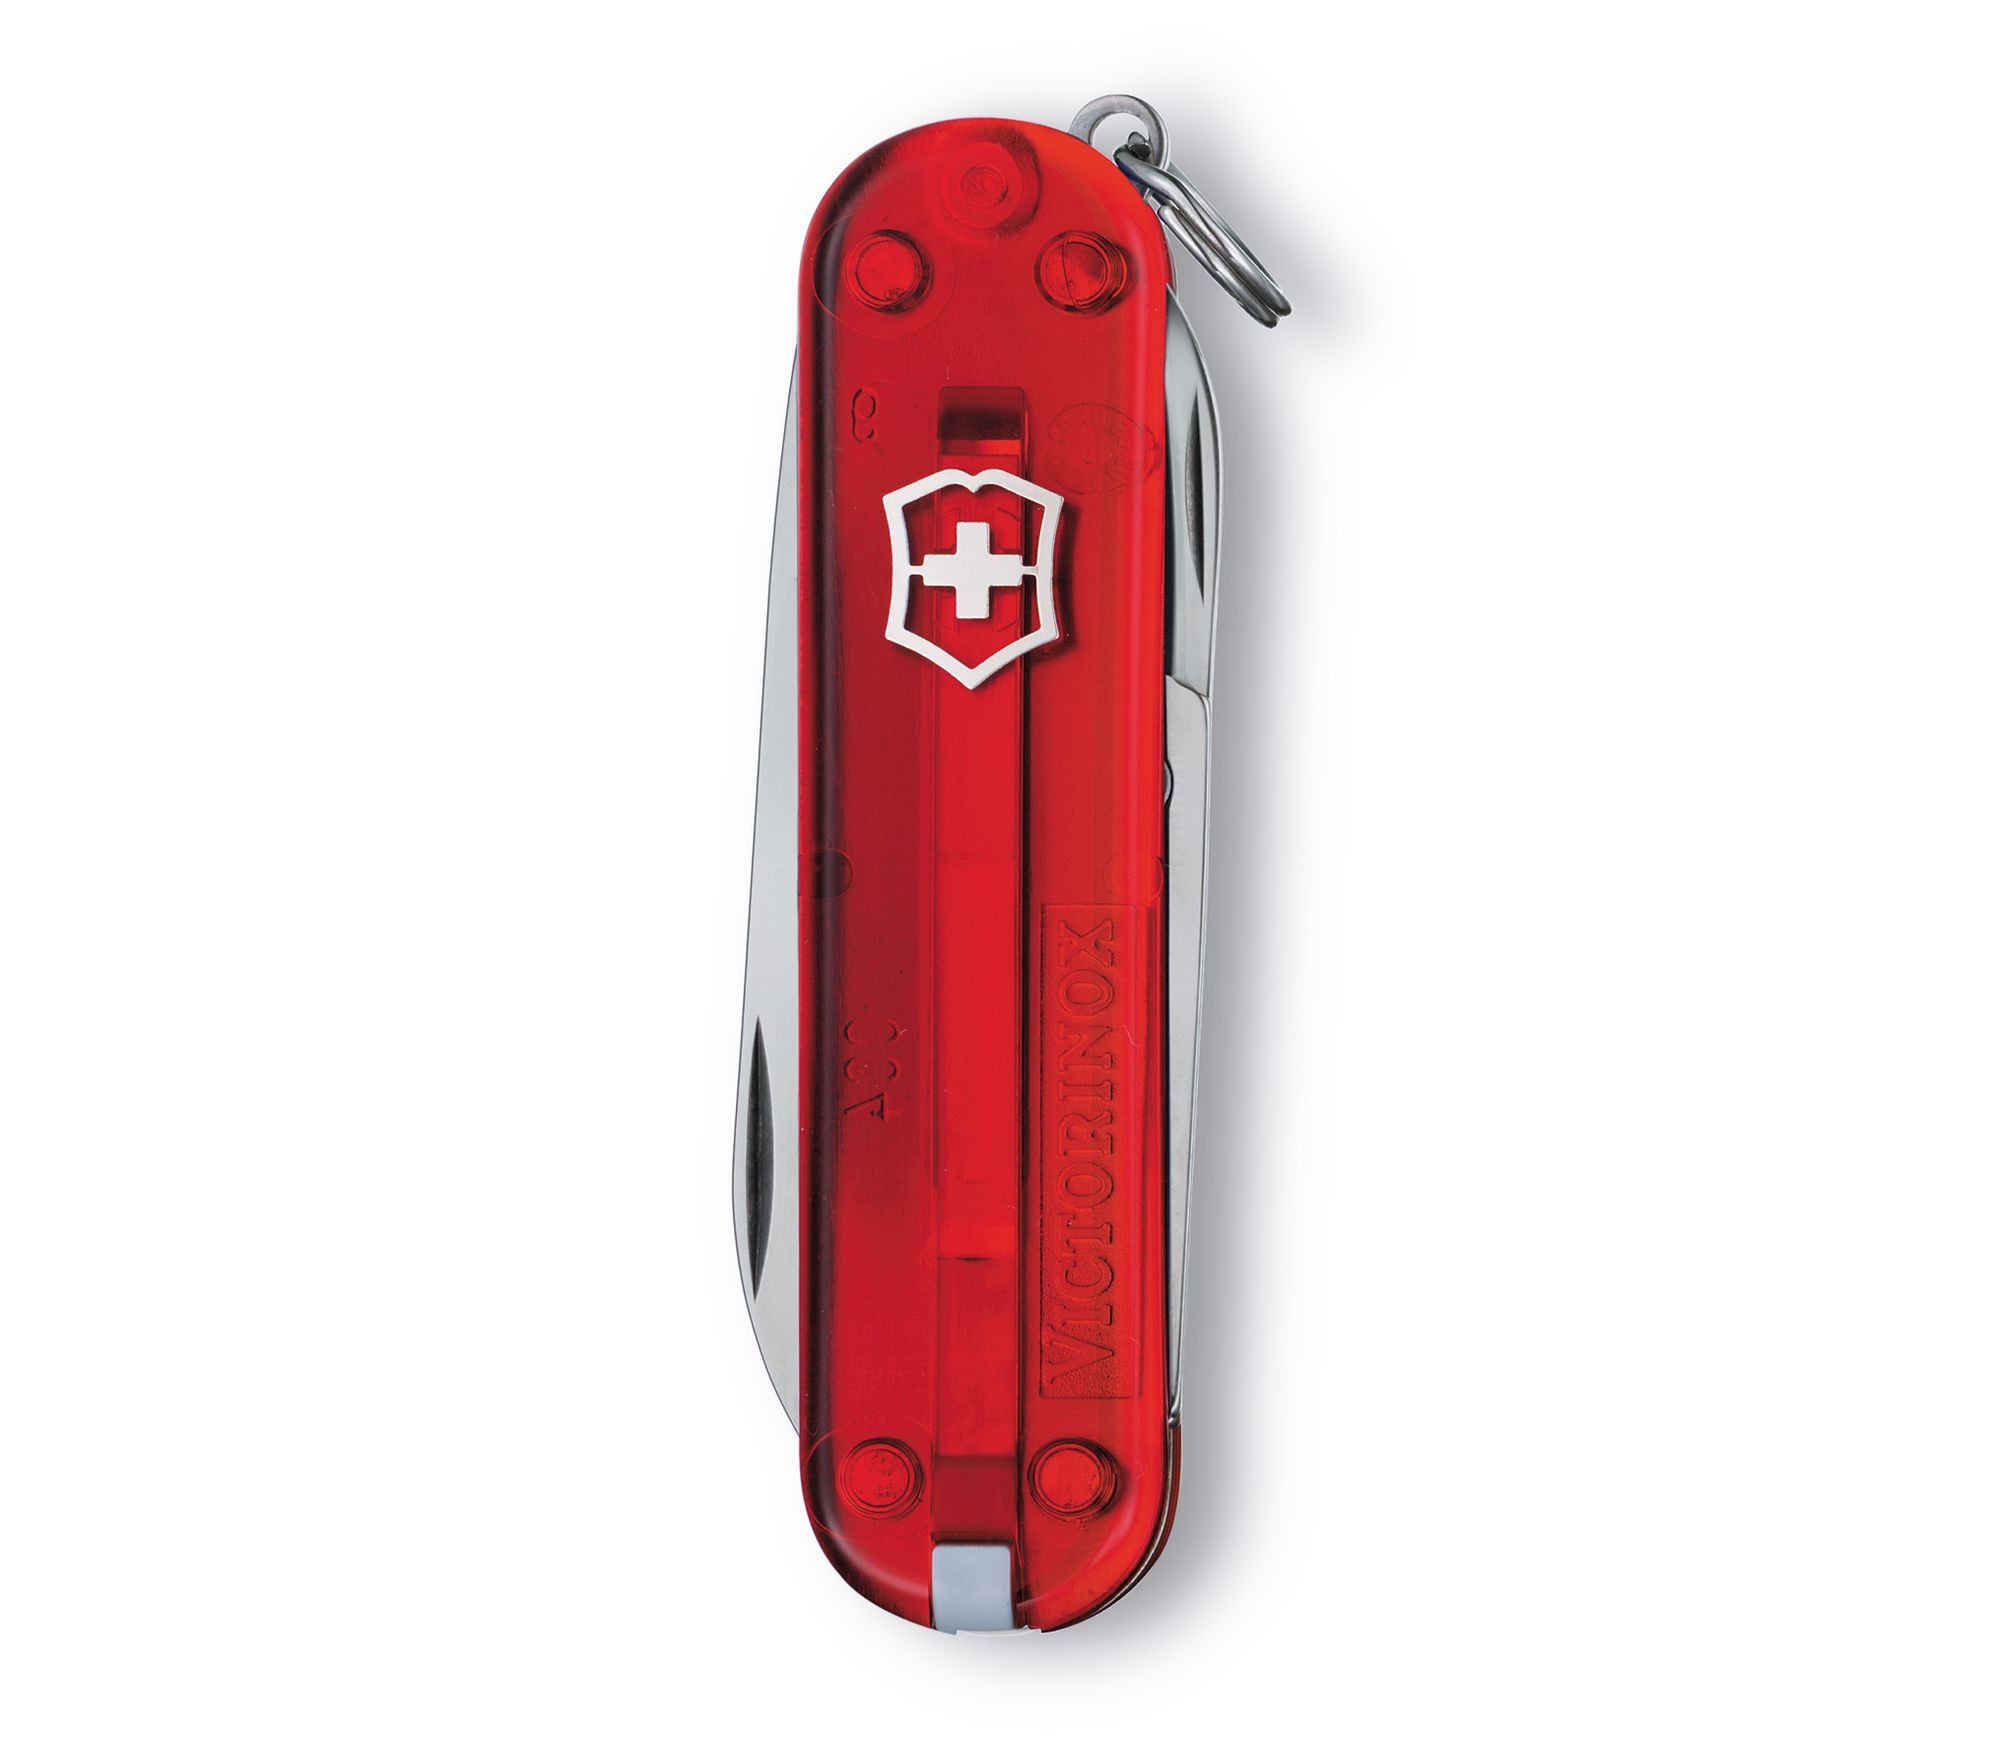 Pocket knife CLASSIS SD, red translucent, Skai case